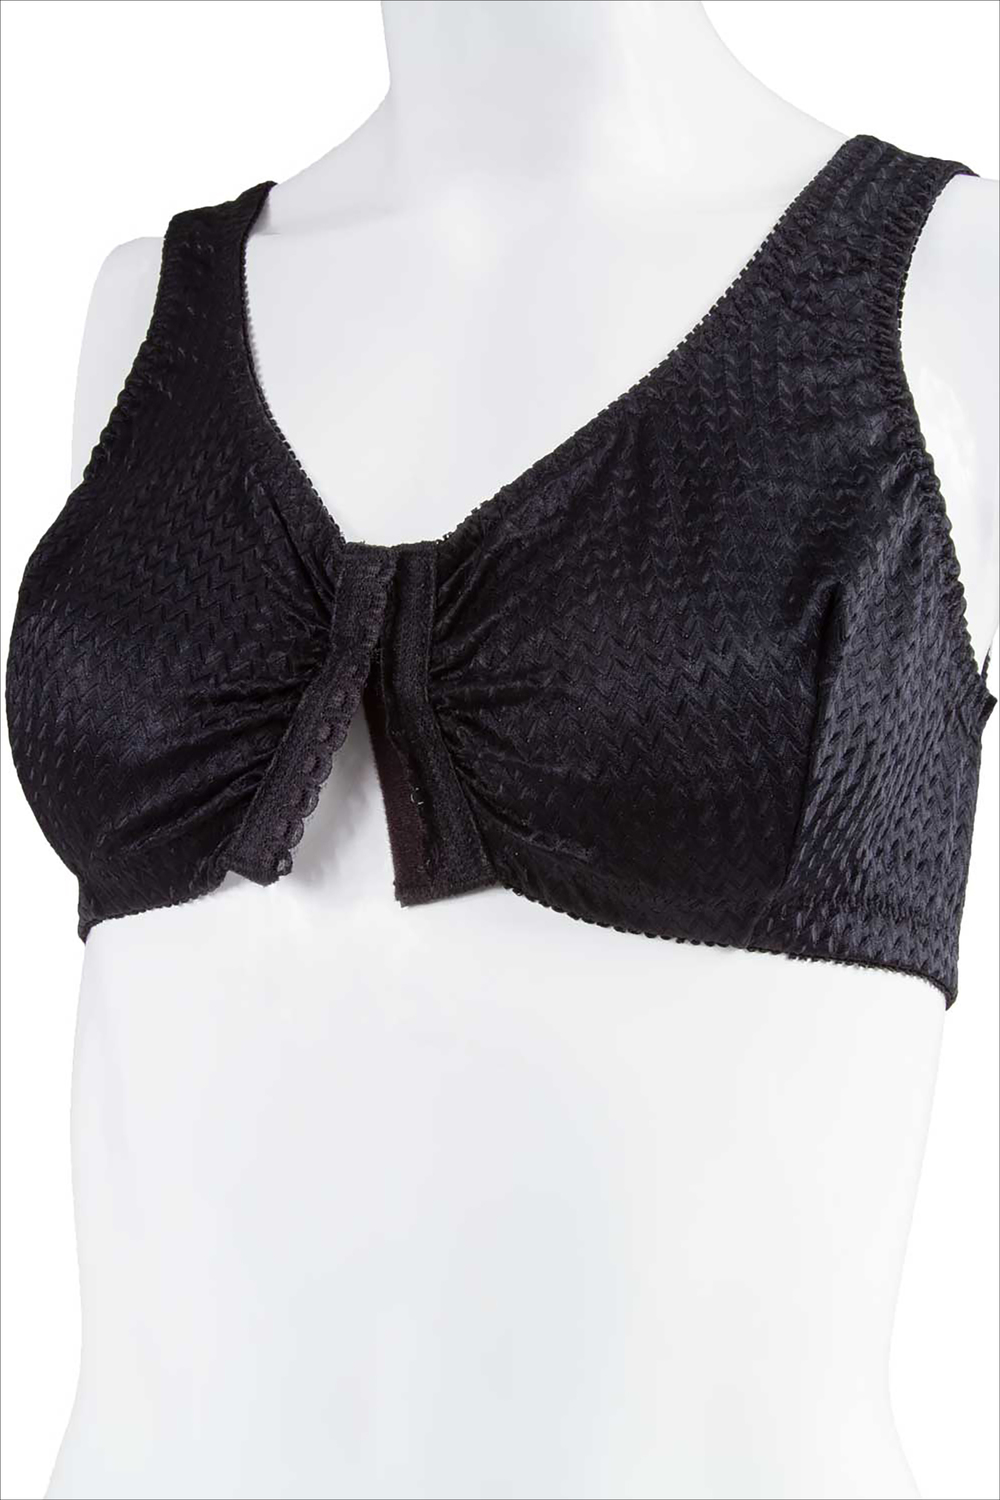 Full Freedom Comfort Bra, 1 unit, 36, Black – Carole Martin : Underwear